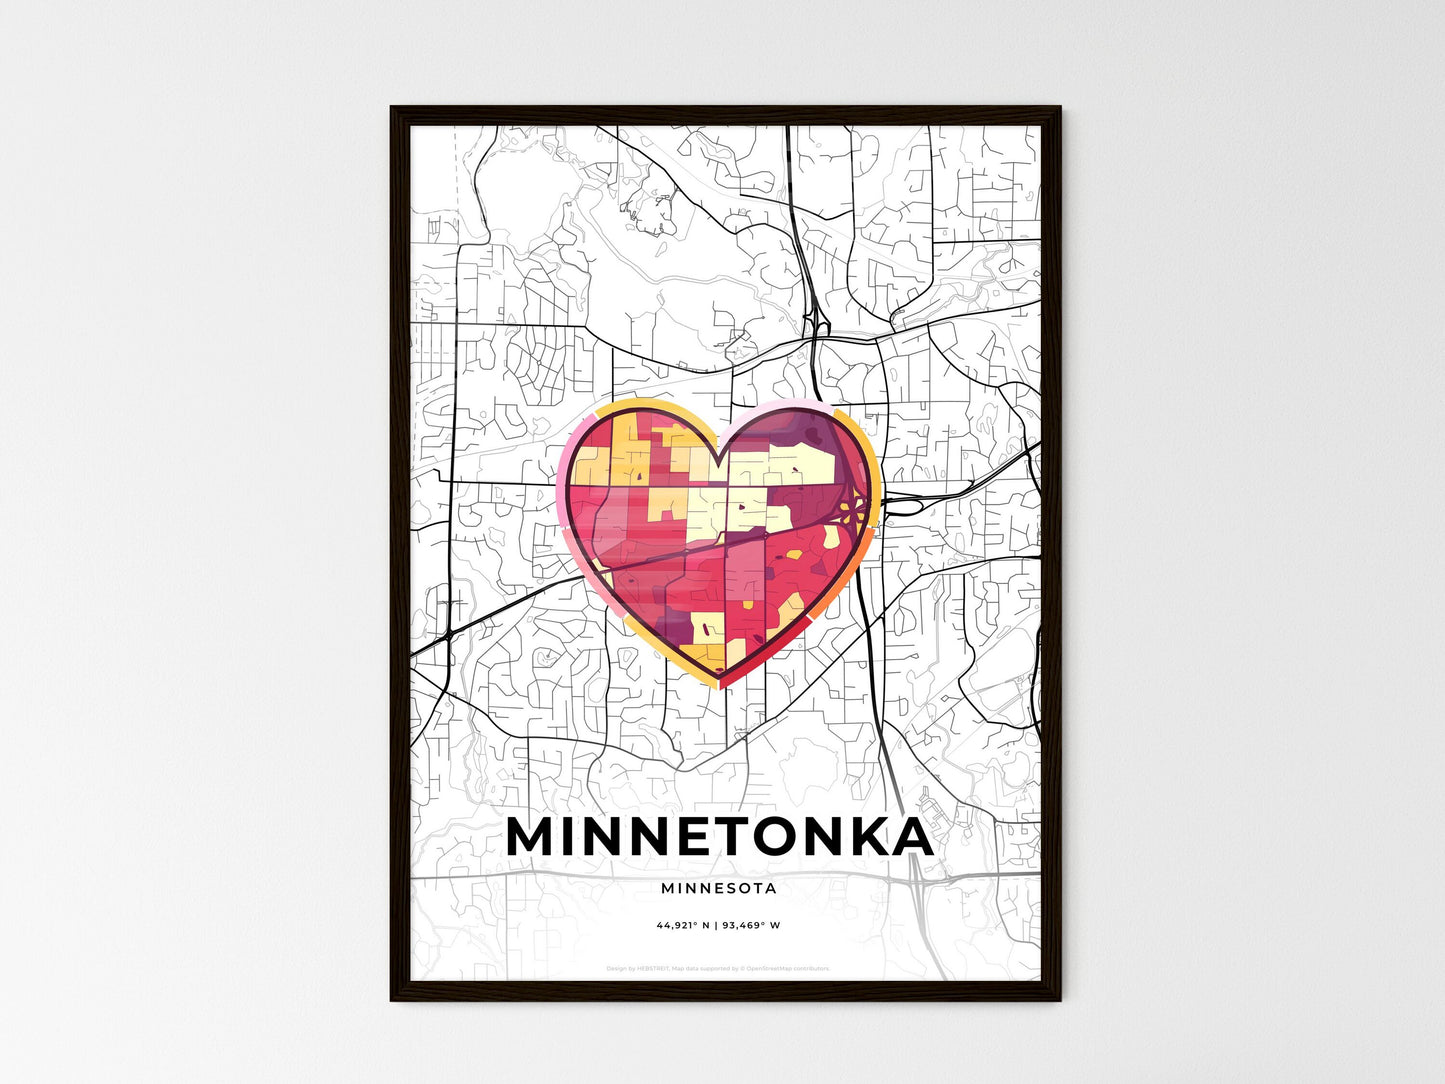 MINNETONKA MINNESOTA minimal art map with a colorful icon. Style 2